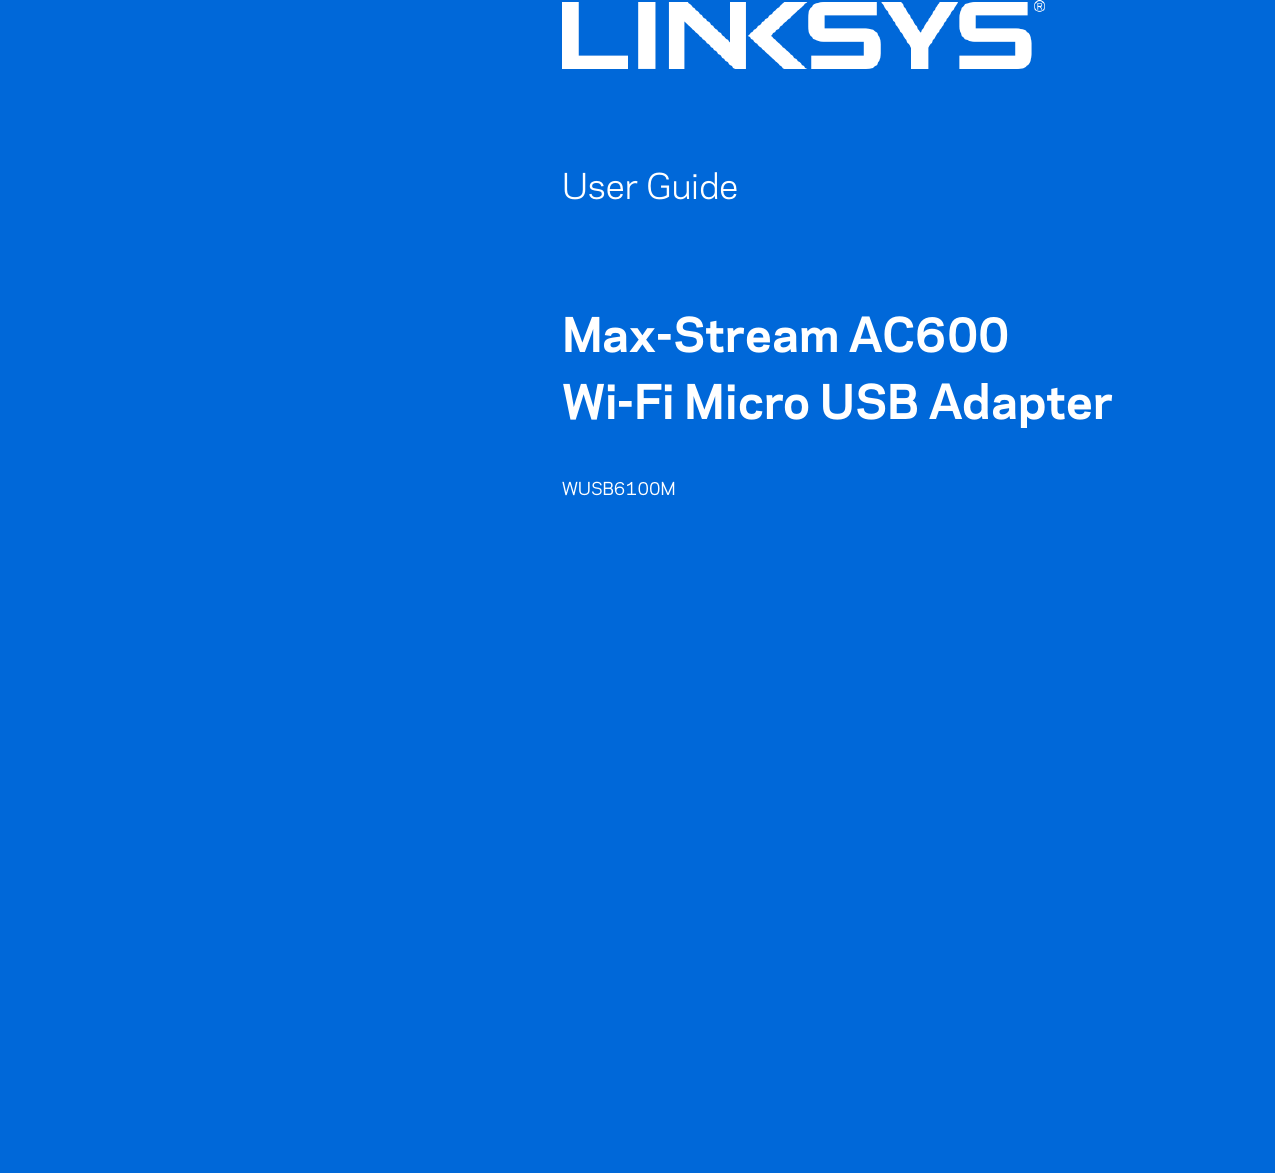             User Guide  Max-Stream AC600  Wi-Fi Micro USB Adapter  WUSB6100M    1  